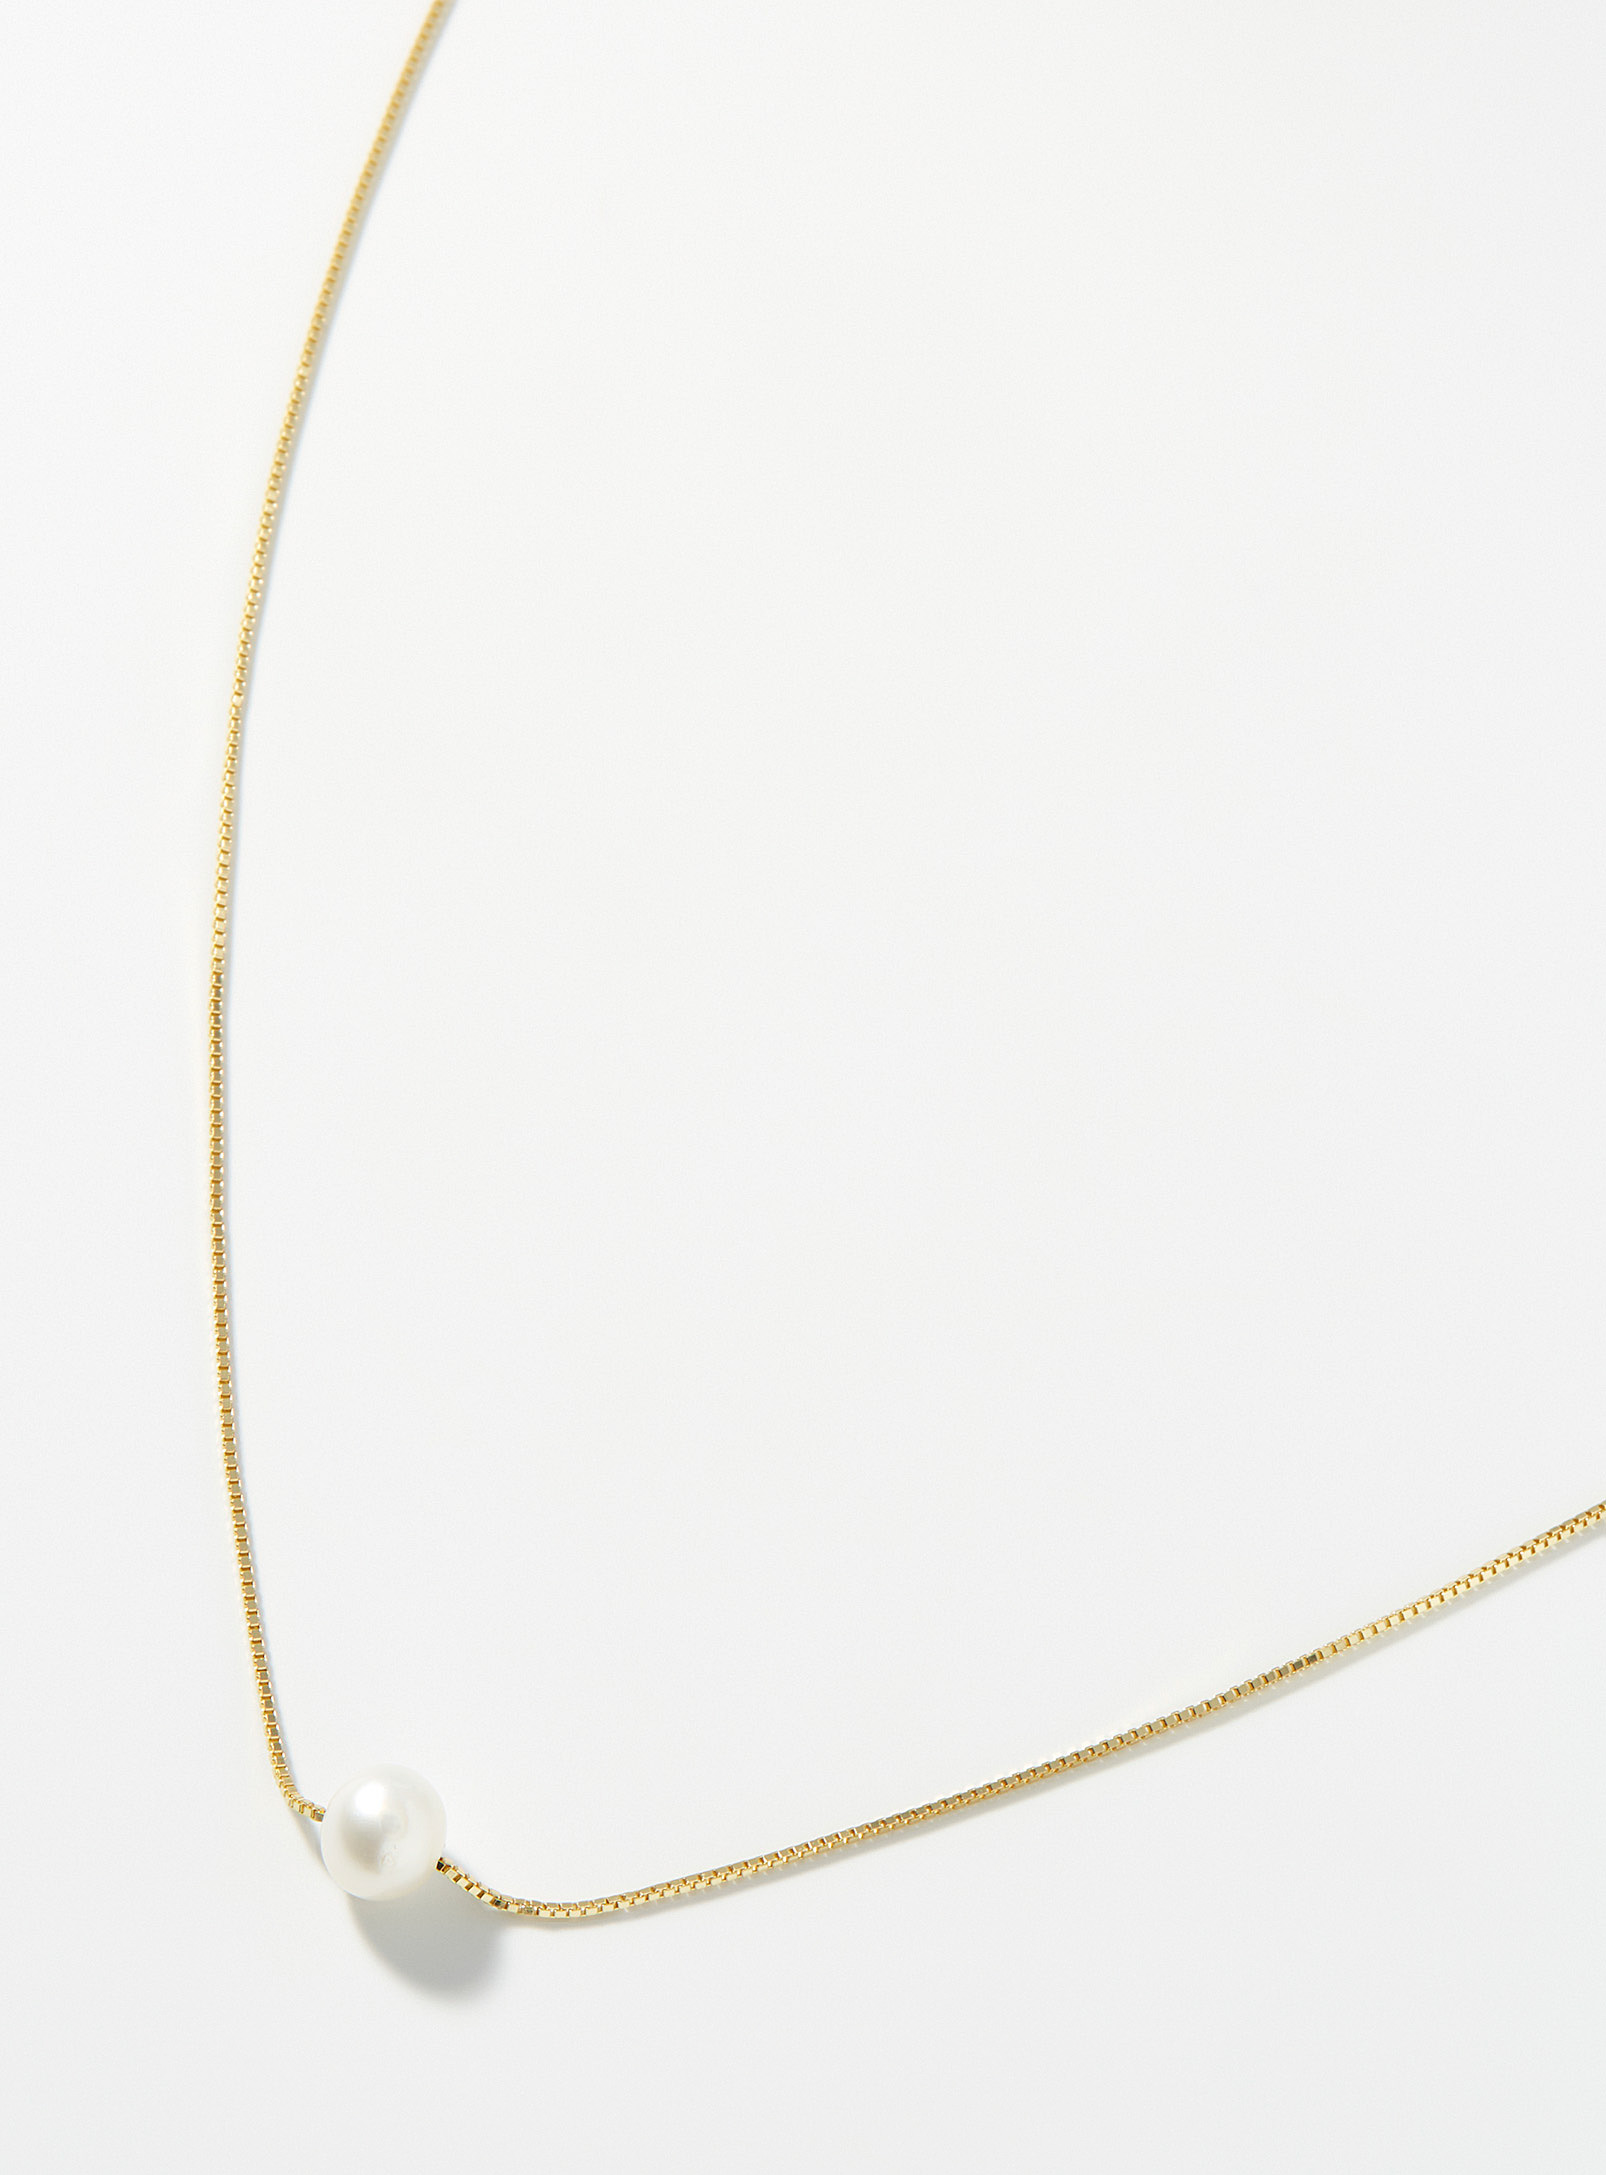 Midi34 x Simons - Women's Solange necklace